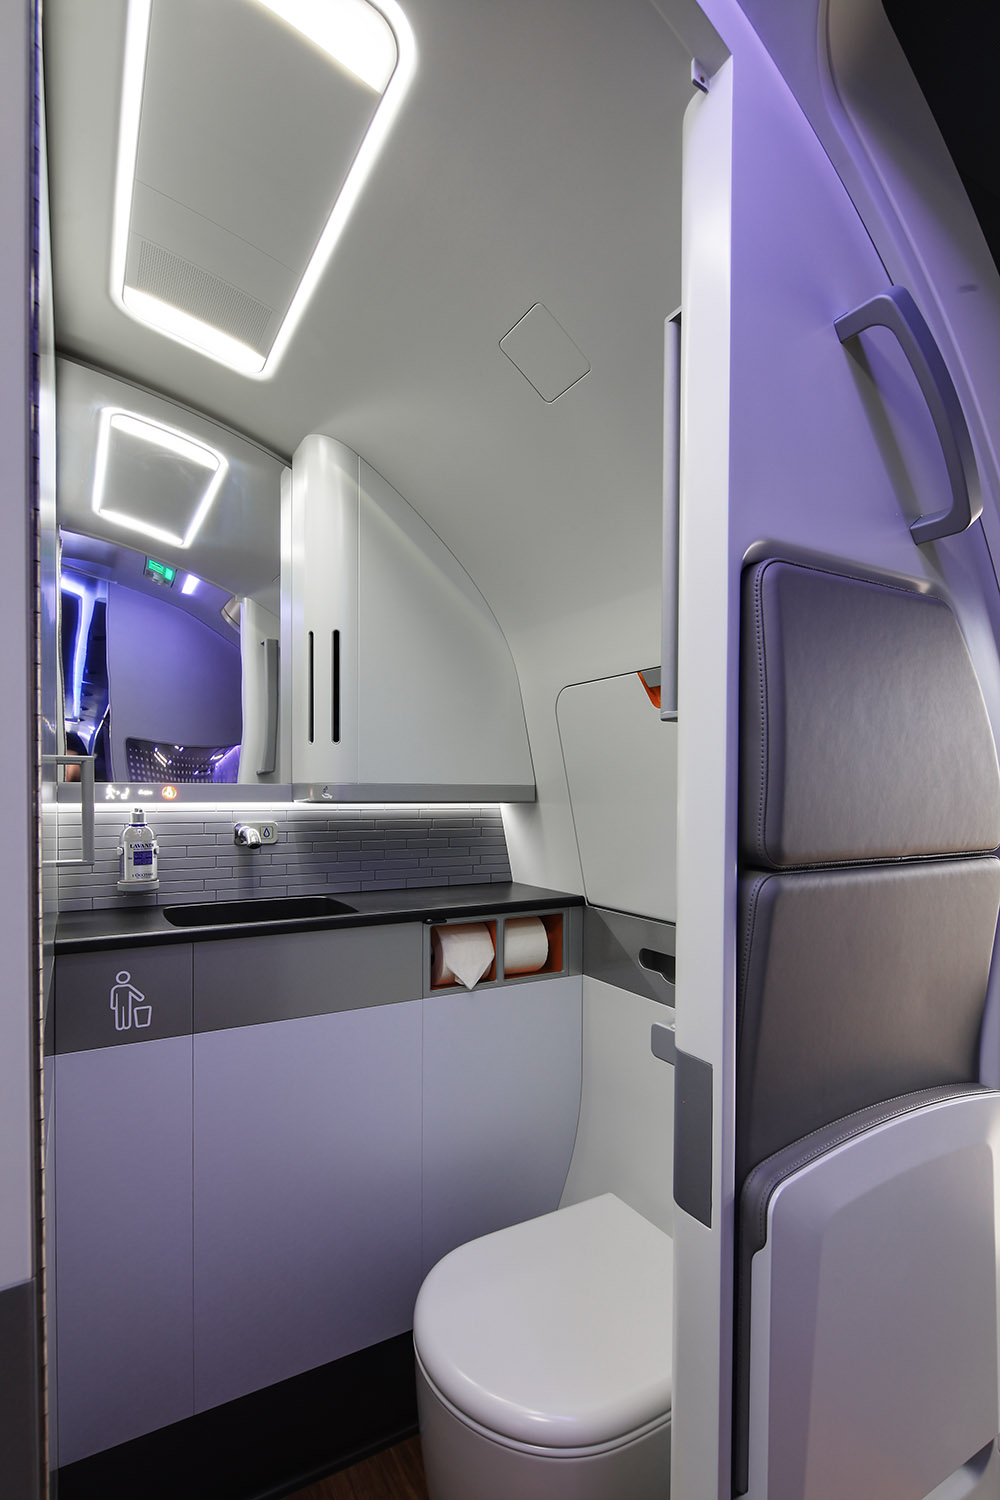 Inside Embraer E2 cabin mock-up, Farnborough Airshow, UK